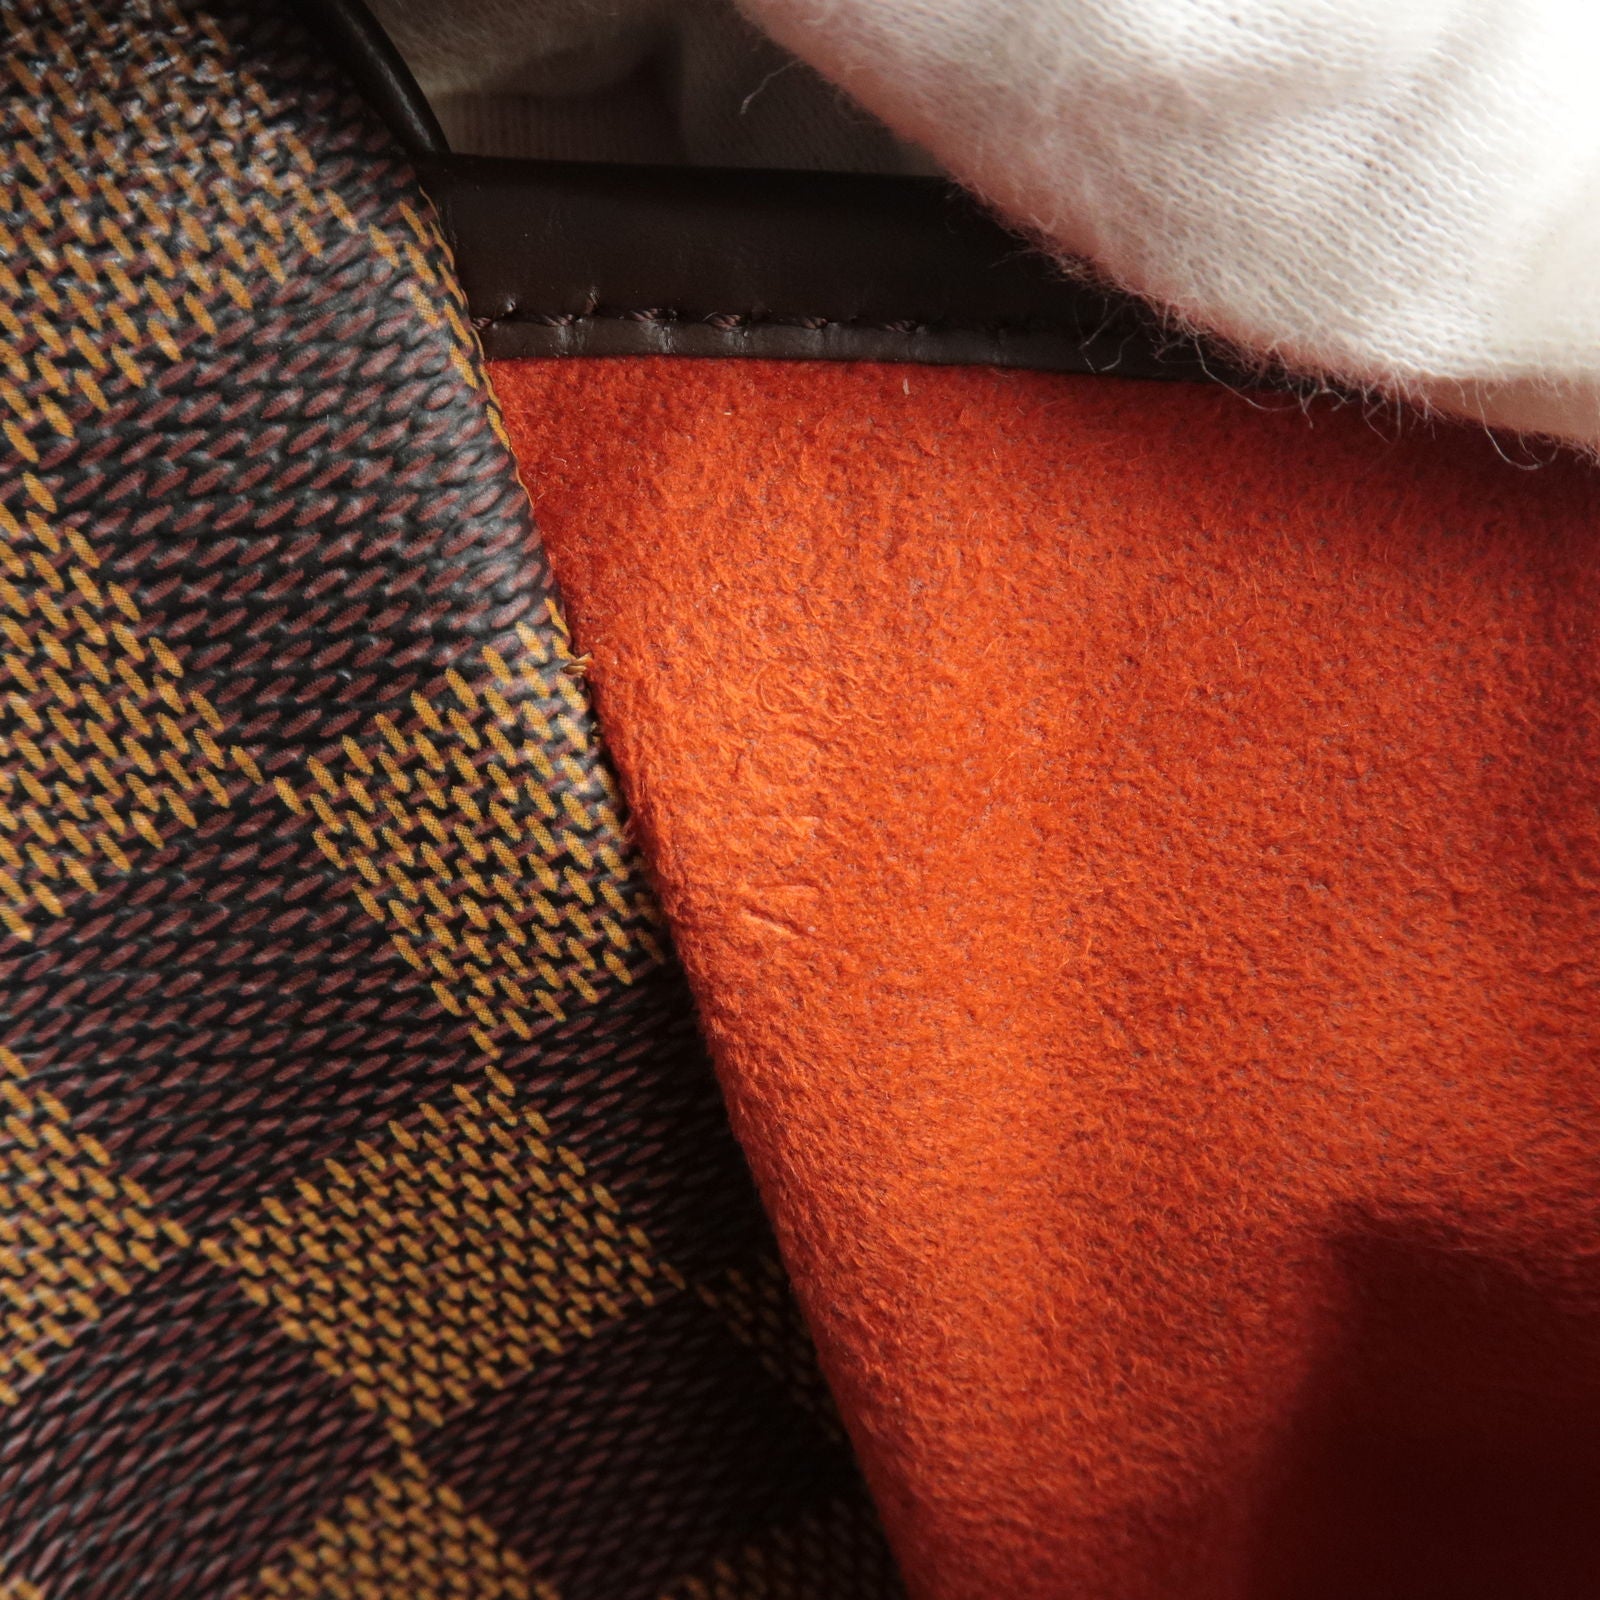 Louis Vuitton pre-owned Ipanema PM crossbody bag Braun